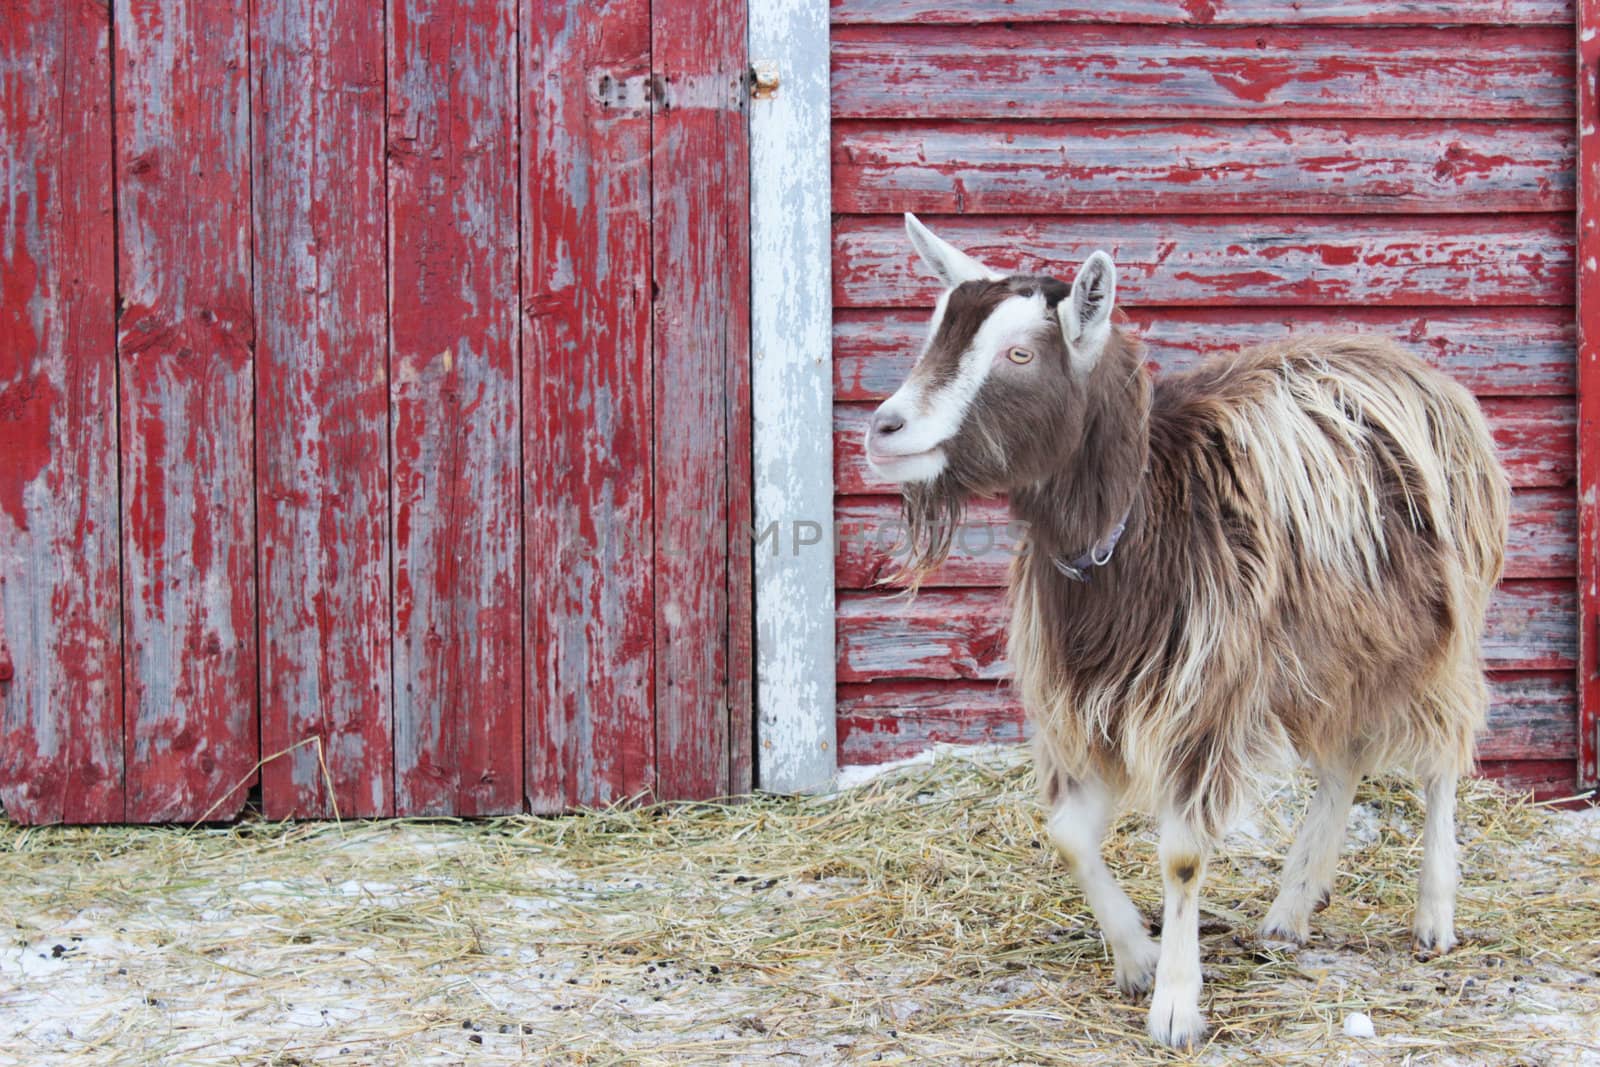 Barnyard Goat I by travellinjess